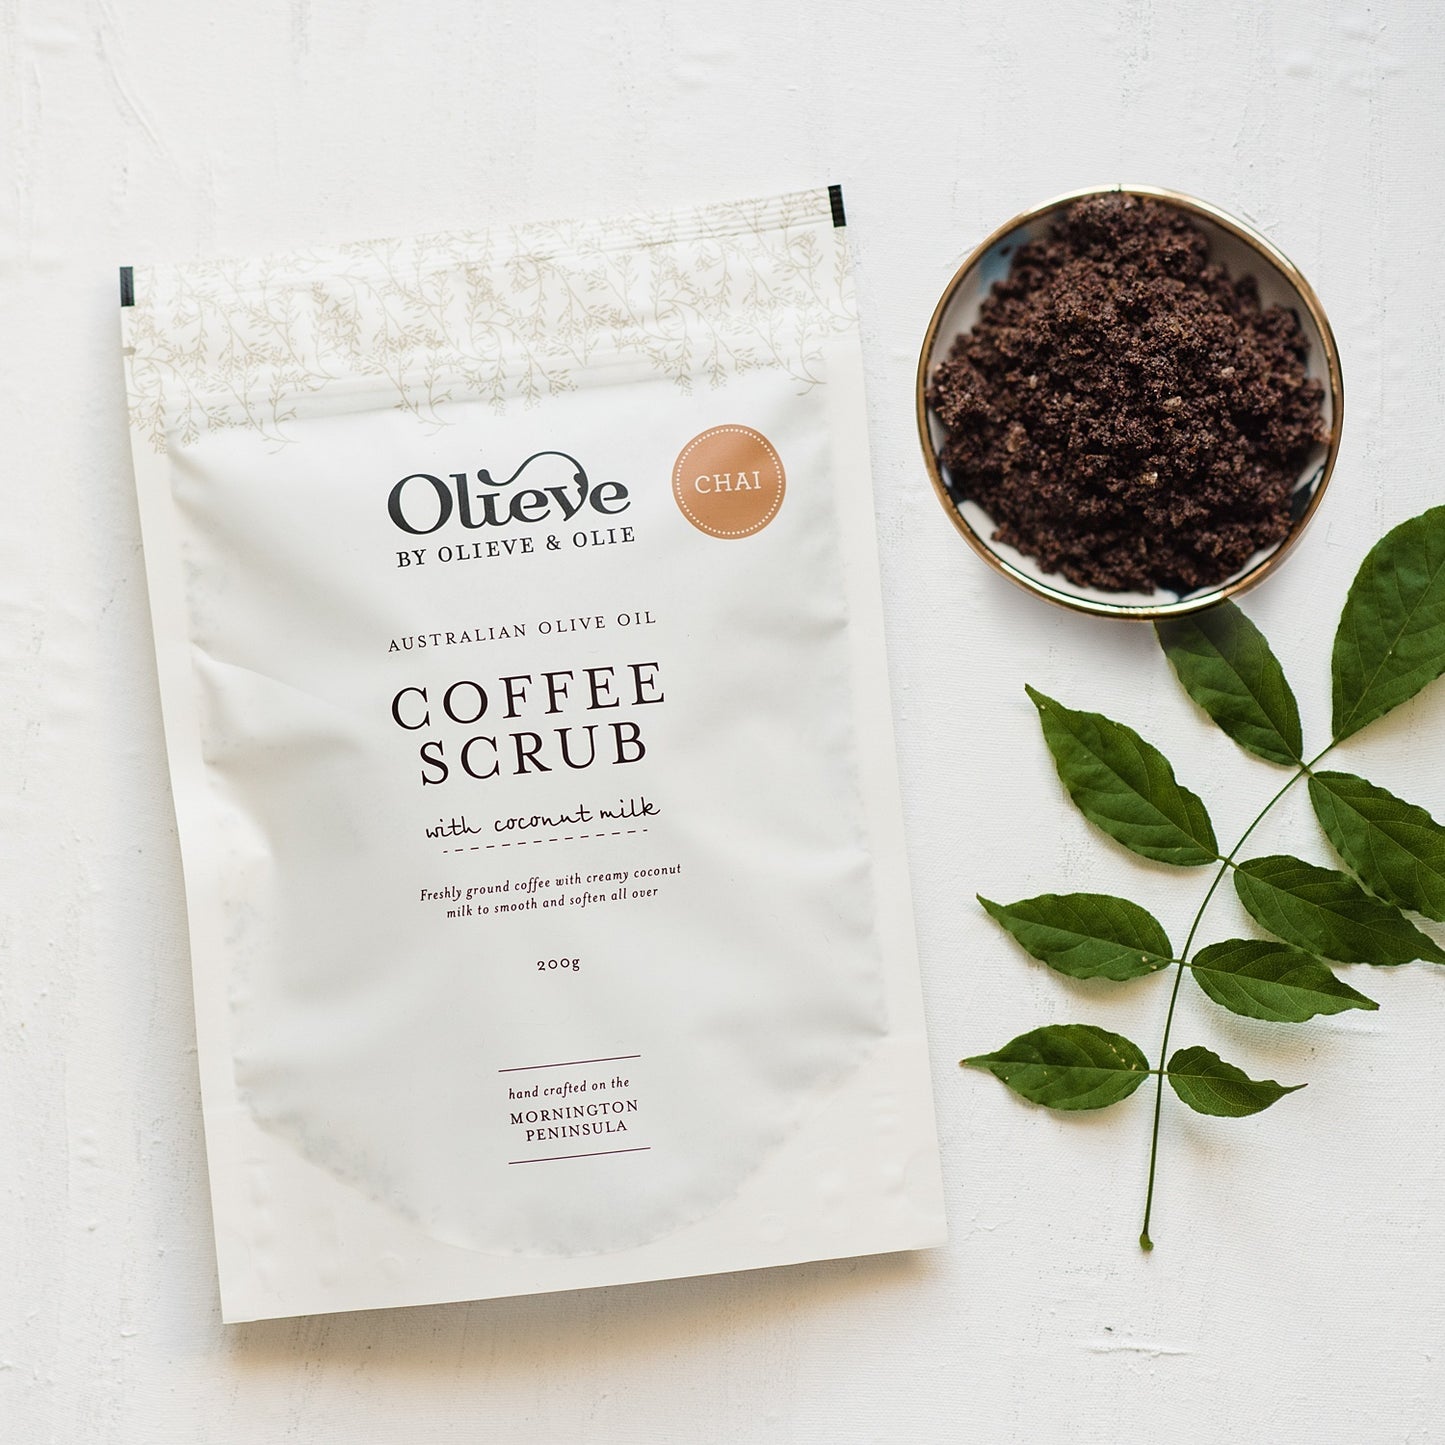 OLIEVE & OLIE - BODY SCRUB - CHAI COFFEE SCRUB